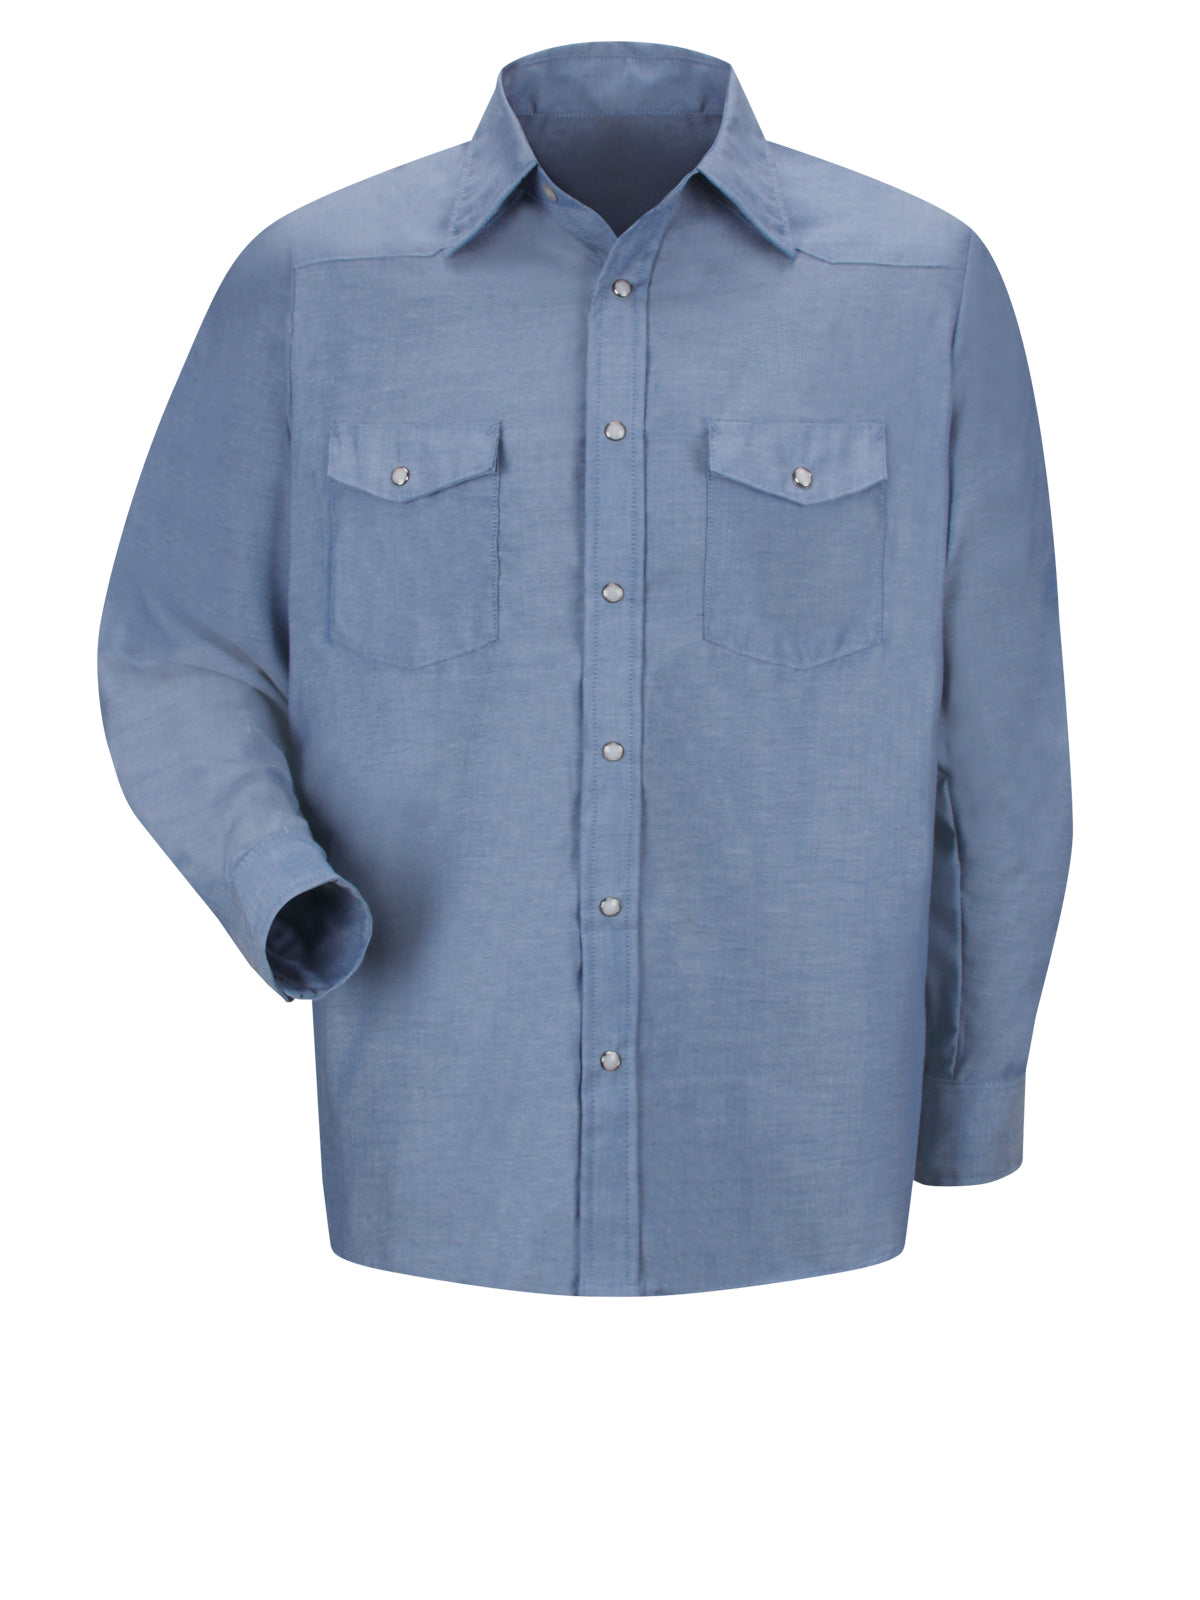 Men's Long Sleeve Deluxe Western Style Shirt - SC14 - Light Blue